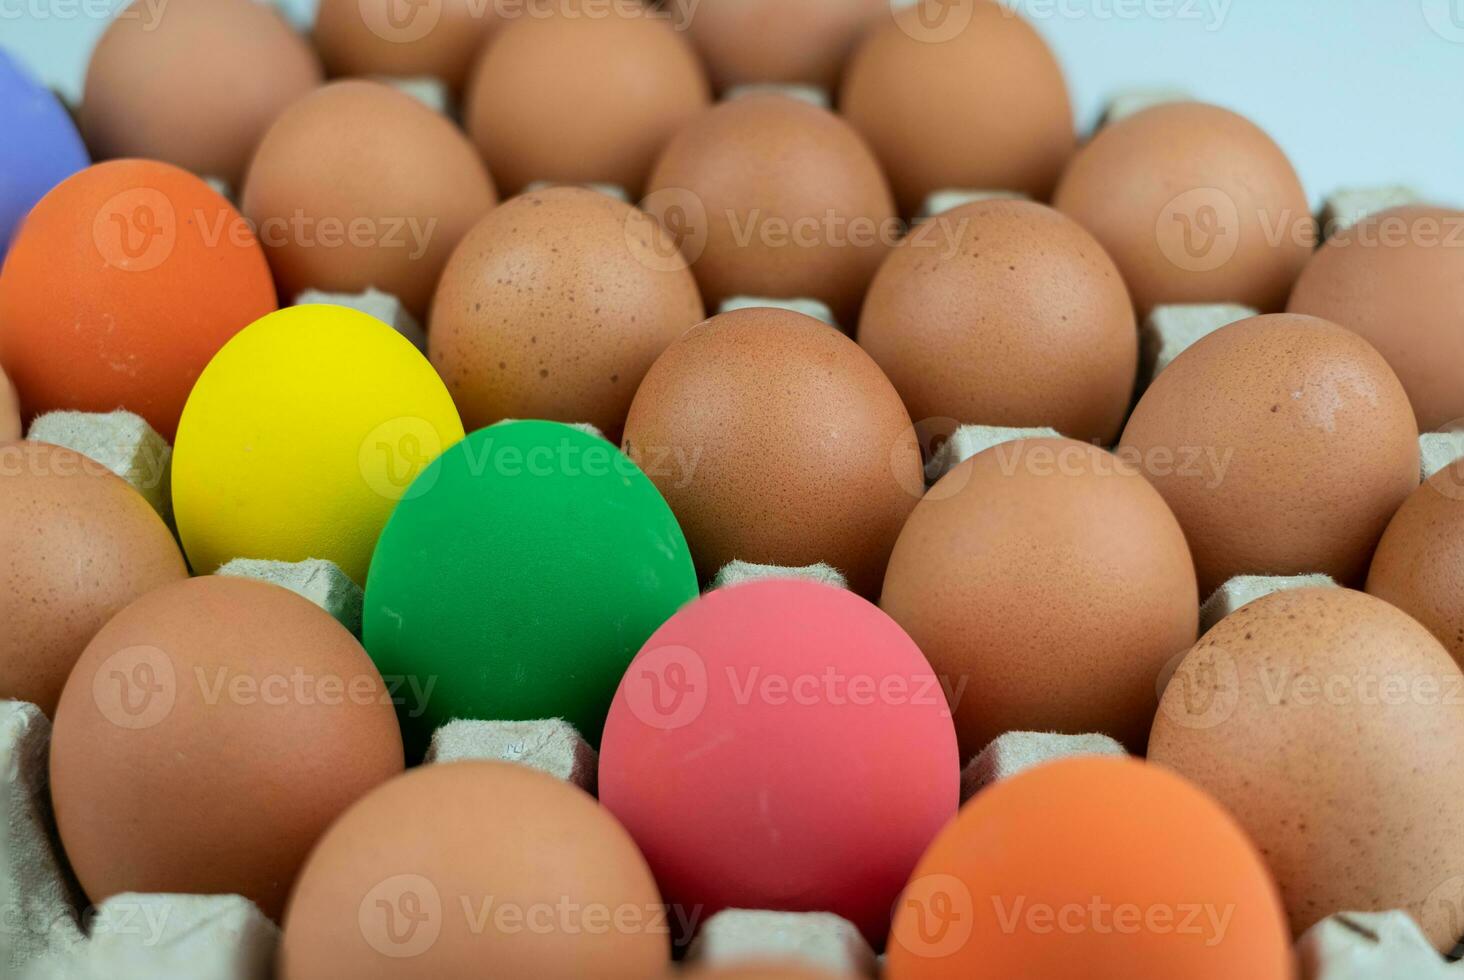 Cartón de huevos con pollo colorido huevo de pascua alineados en filas con fondo blanco. foto